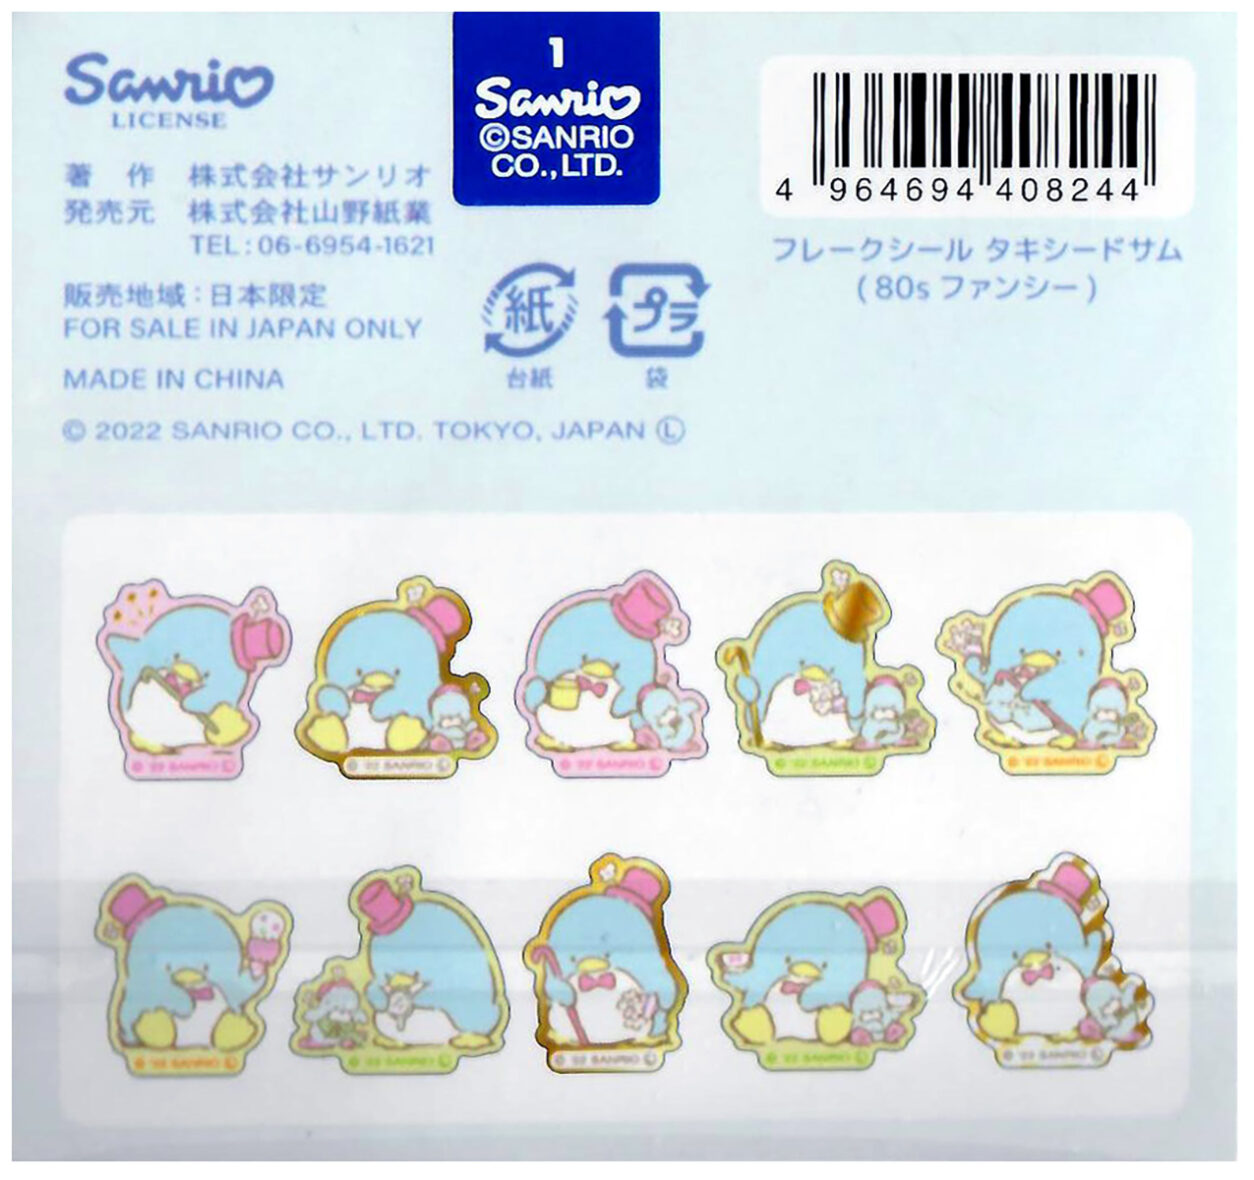 Sanrio-Tuxedo Sam2